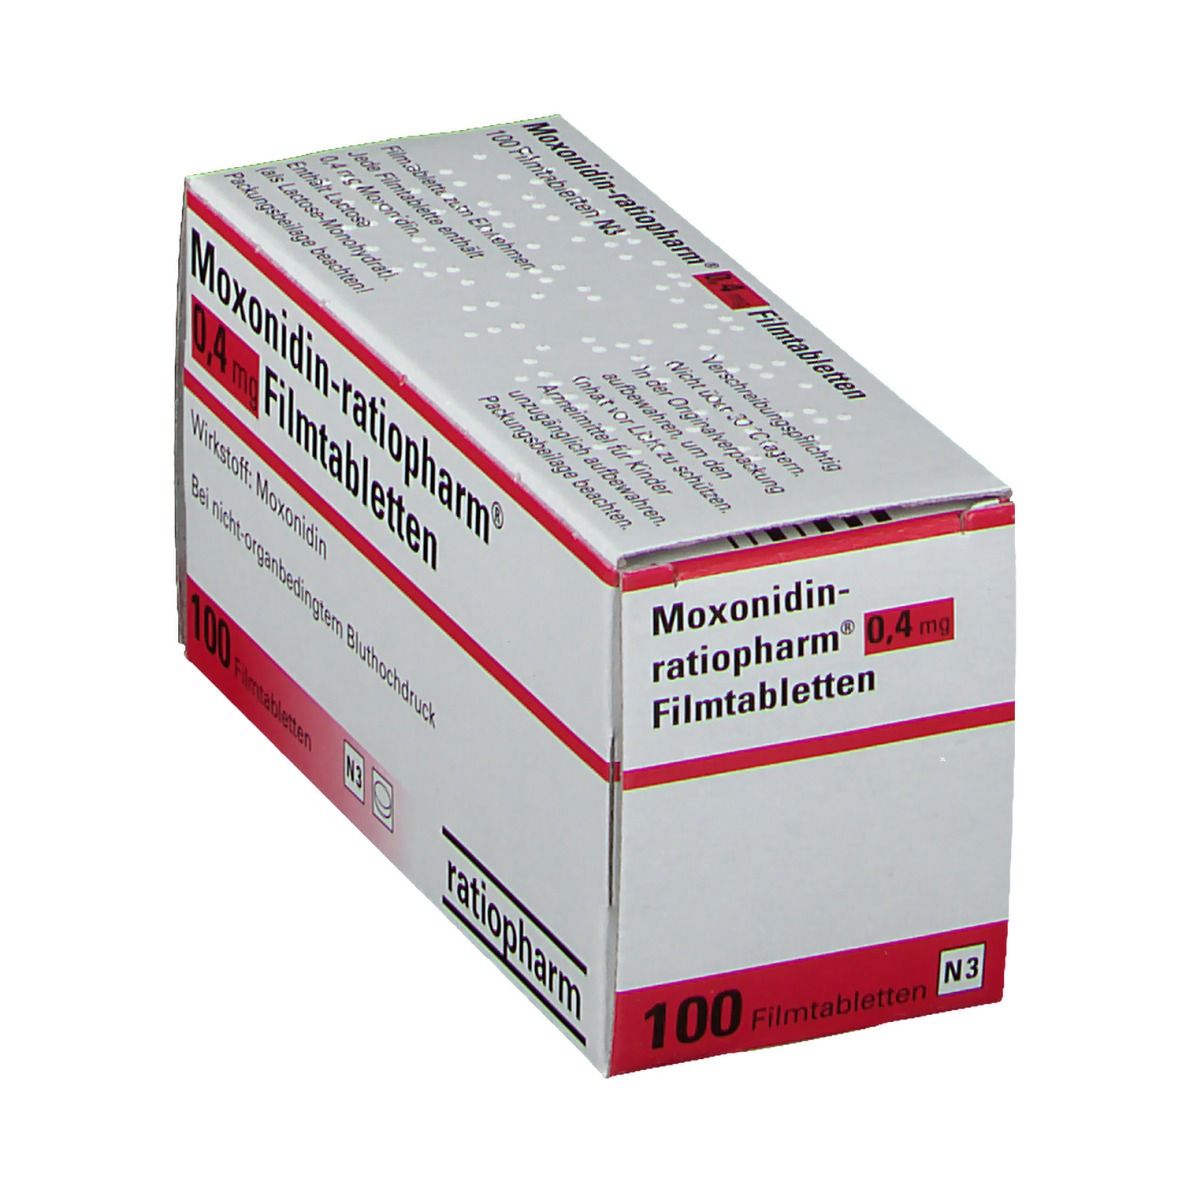 Moxonidin-ratiopharm® 0,4 mg